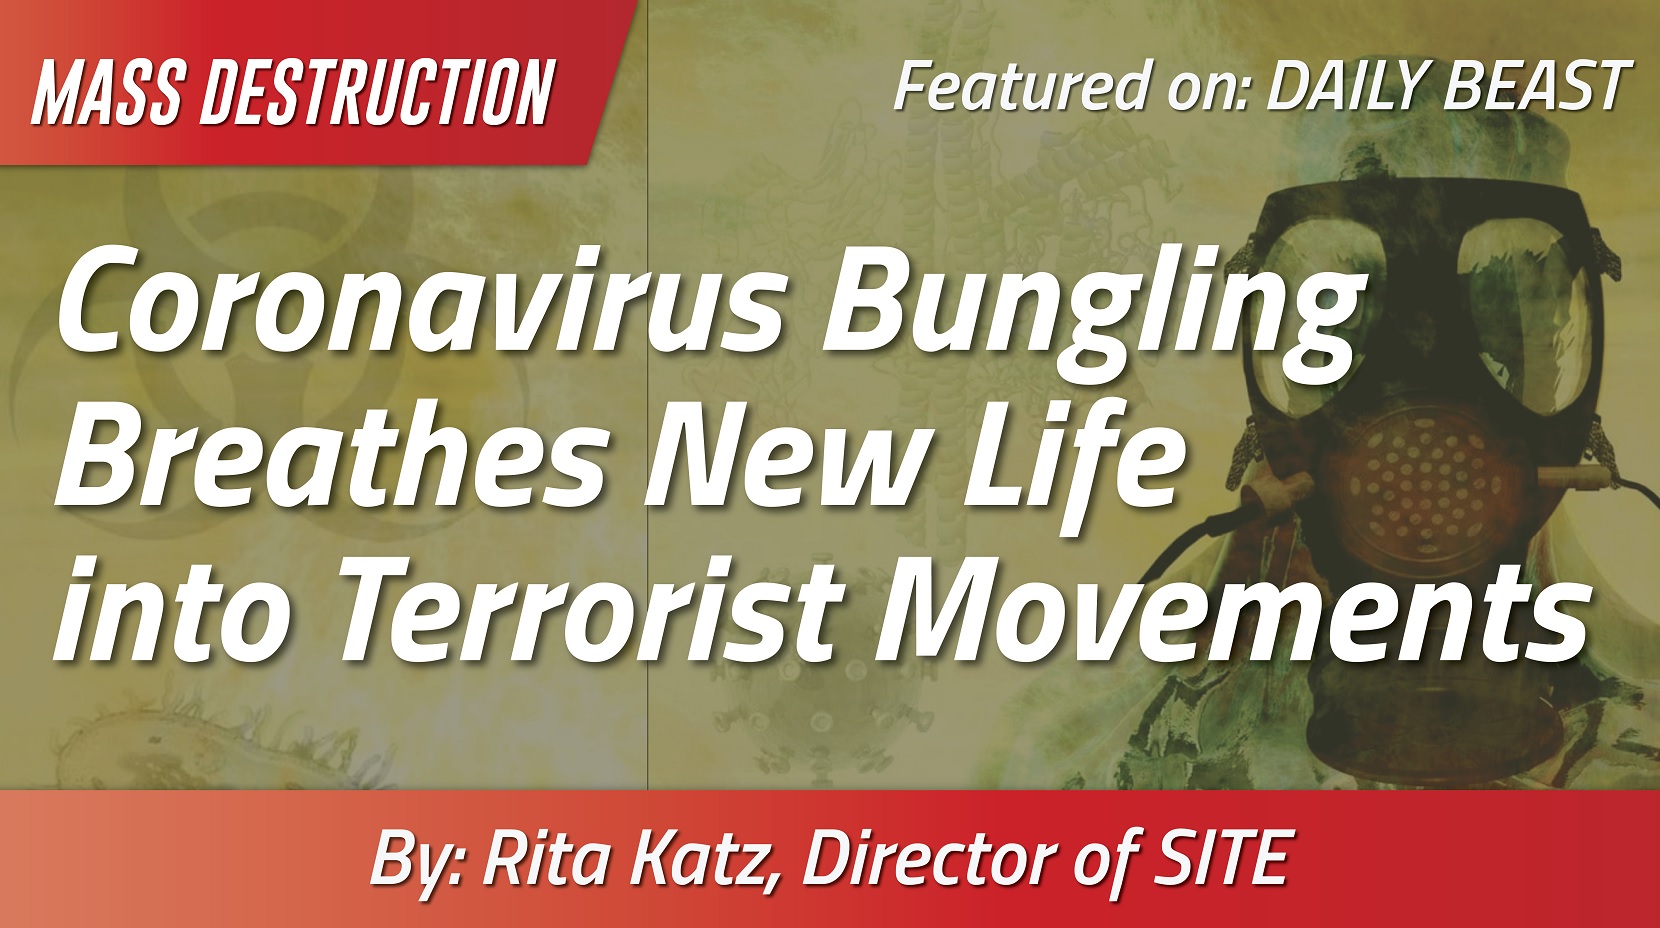 Daily Beast: "Coronavirus Bungling Breathes New Life into Terrorist Movements" - by Rita Katz